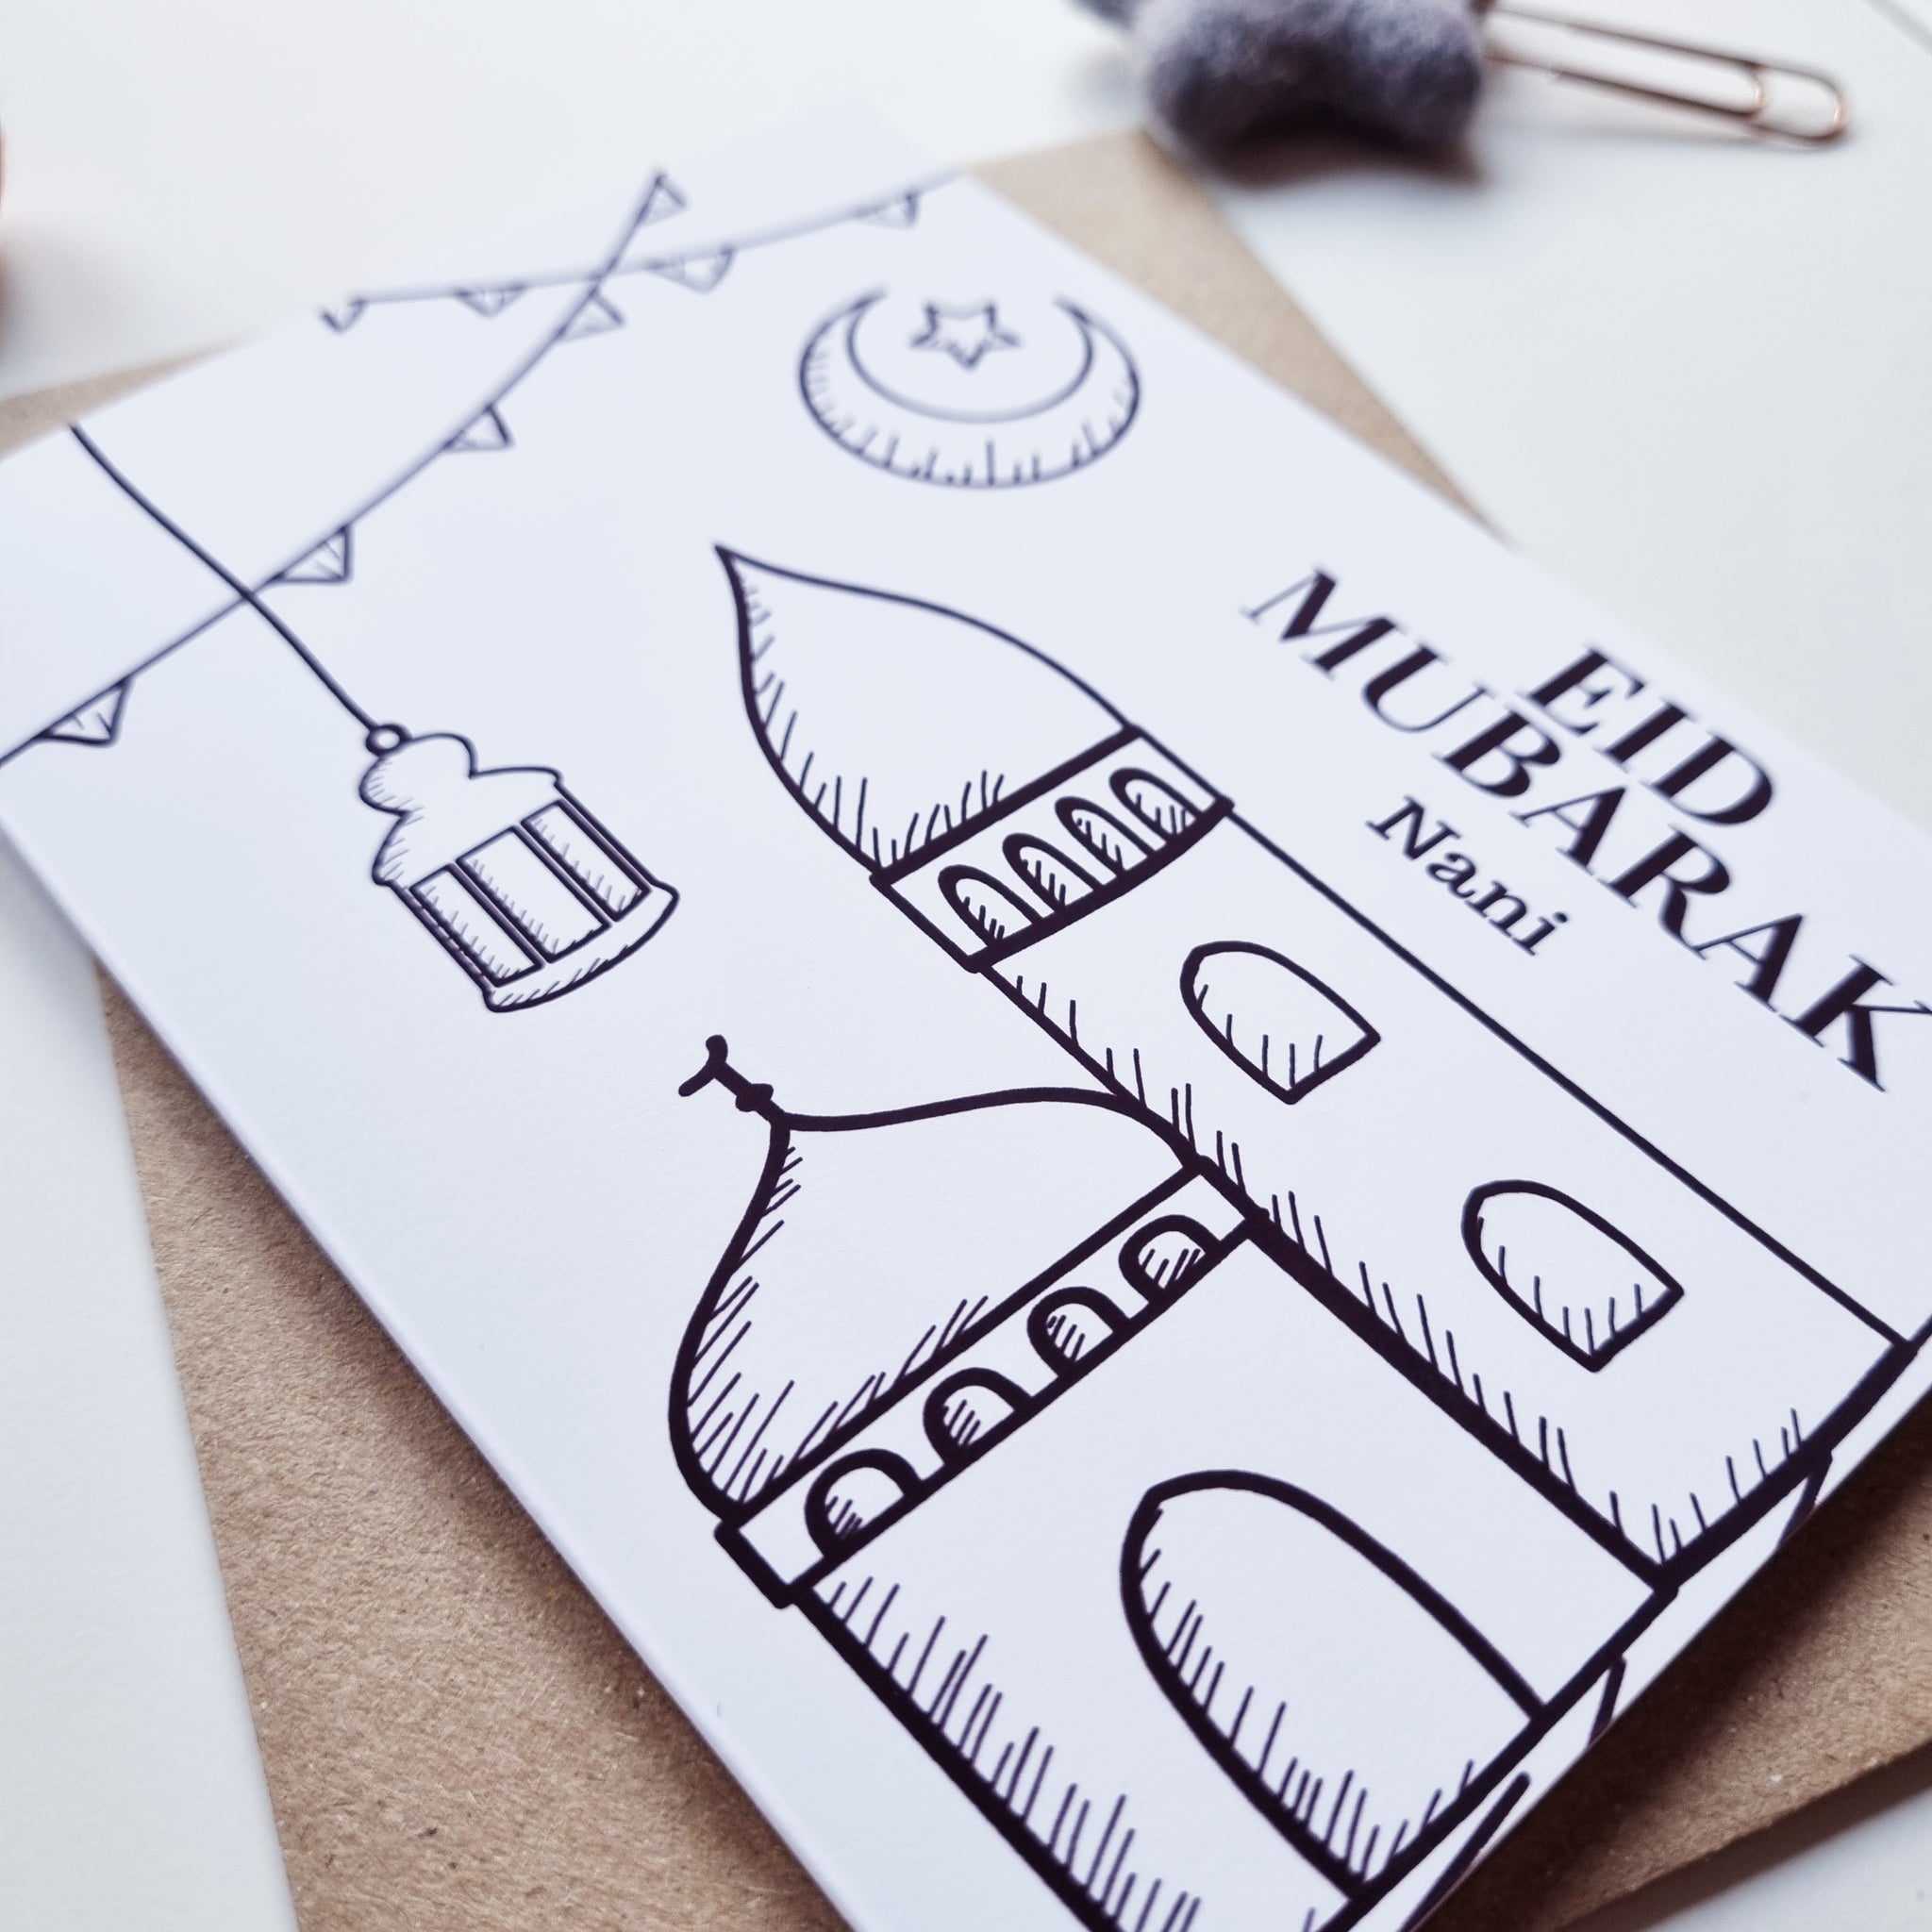 Free Eid al-Fitr Drawing - Download in PDF, Illustrator, PSD, EPS, SVG,  JPG, PNG | Template.net